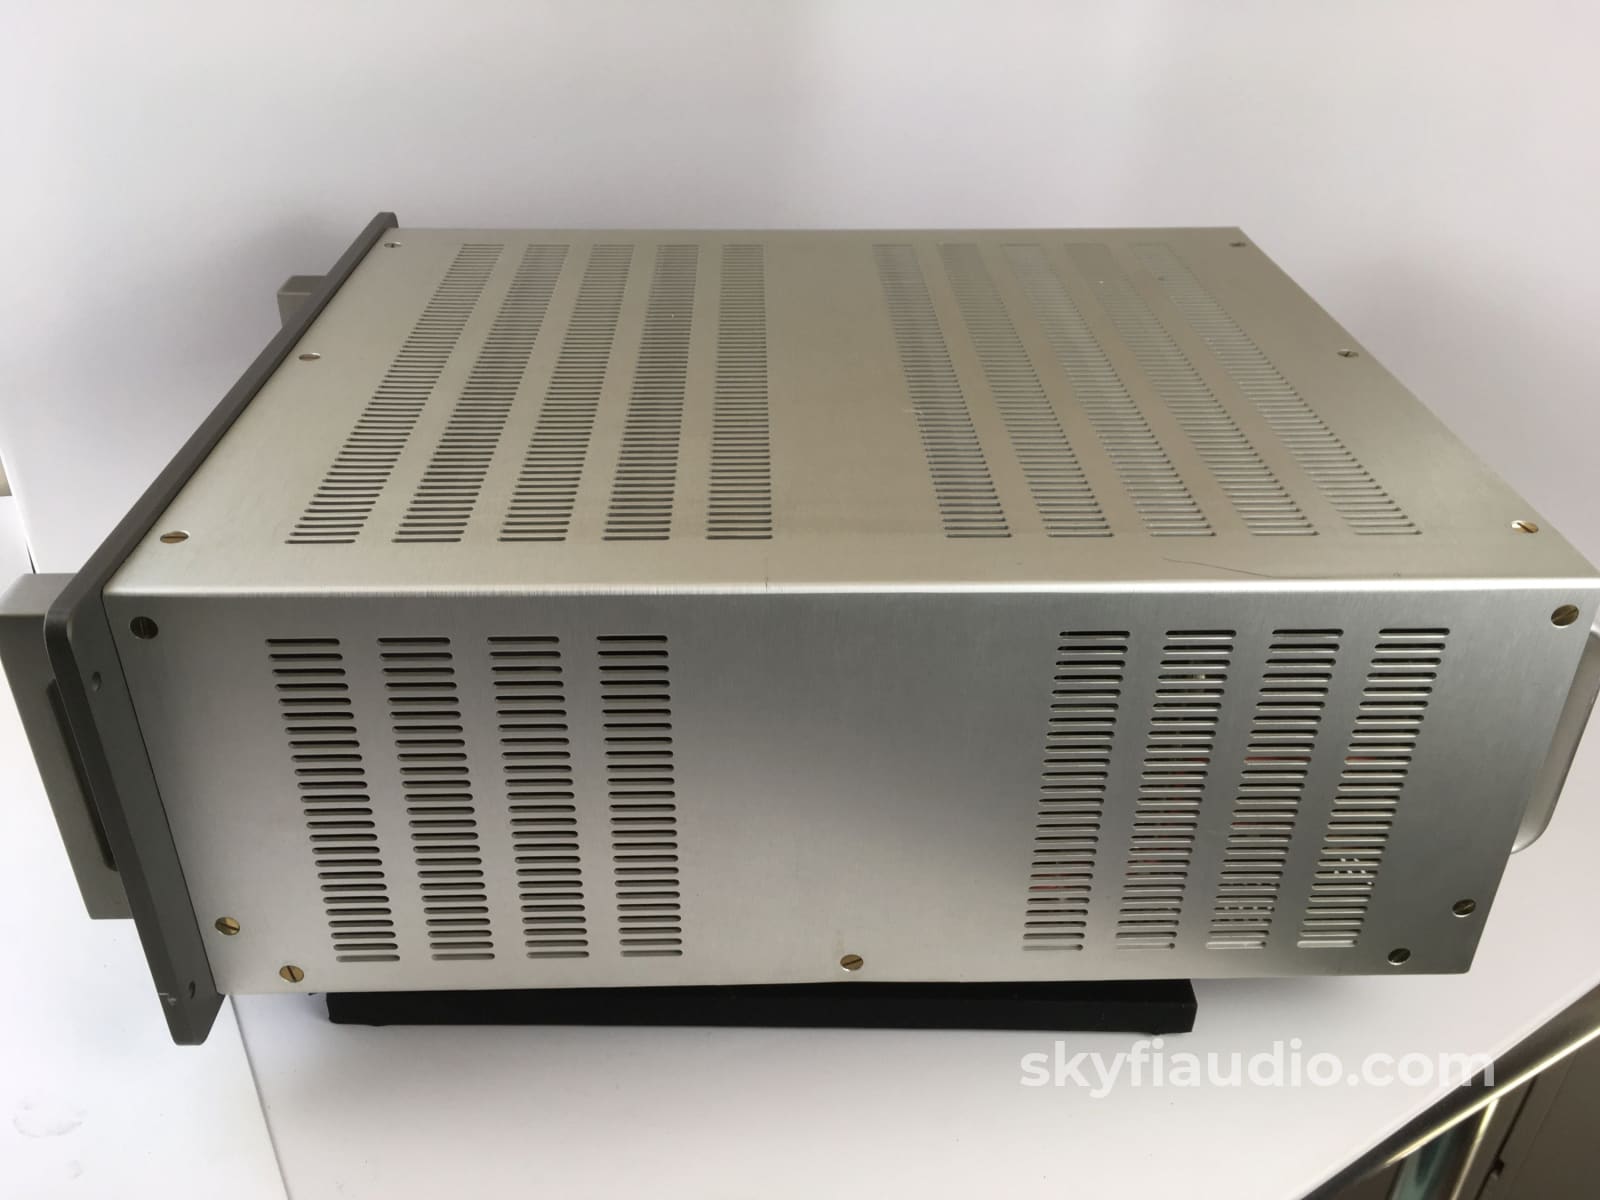 Krell Ksa-100 Mk-2 - Class A Stereo Solid State Amplifier